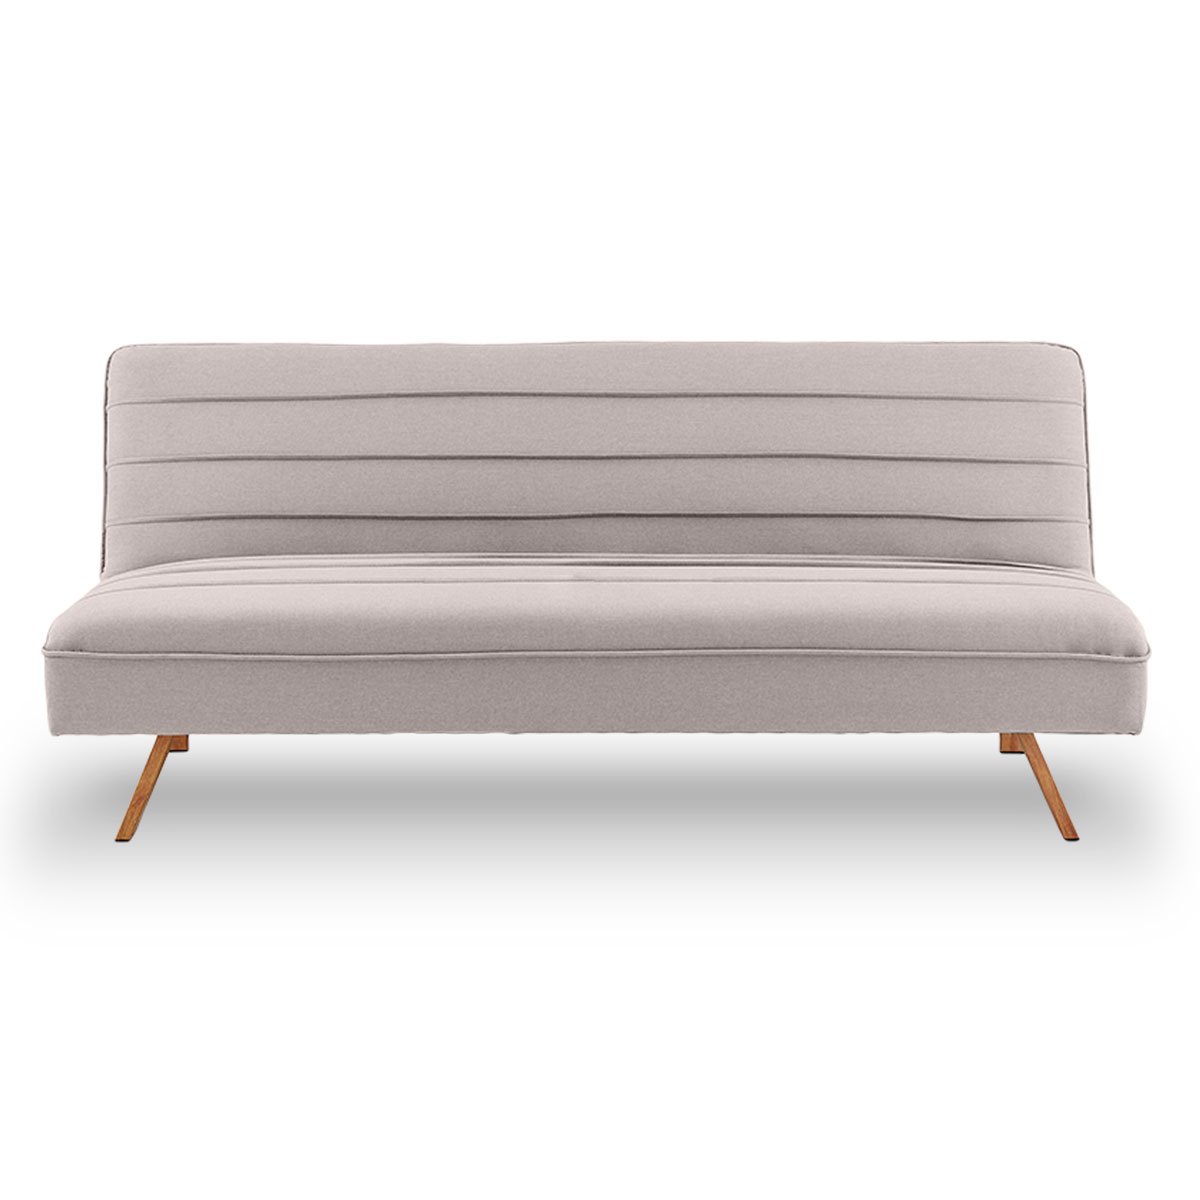 Sarantino 3 Seater Modular Linen Fabric Sofa Bed Couch Futon - Beige 1